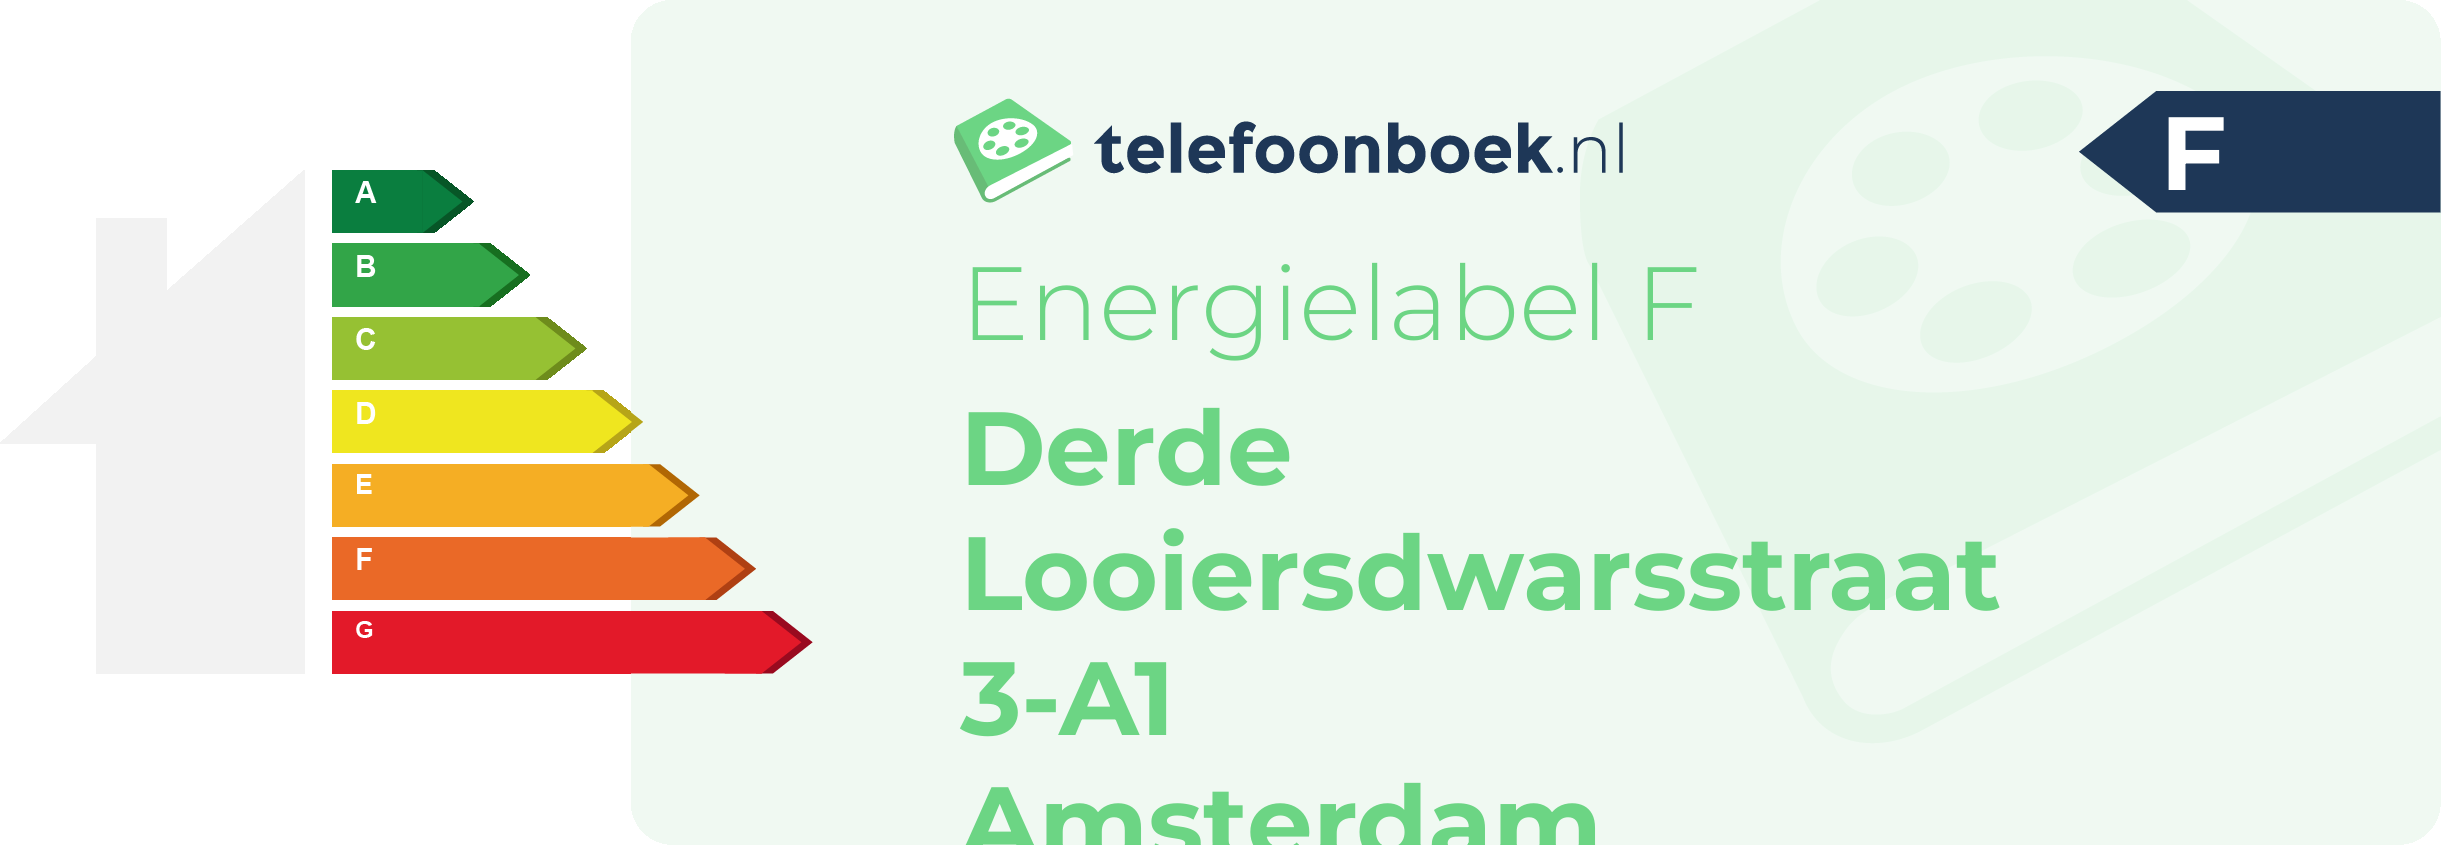 Energielabel Derde Looiersdwarsstraat 3-A1 Amsterdam